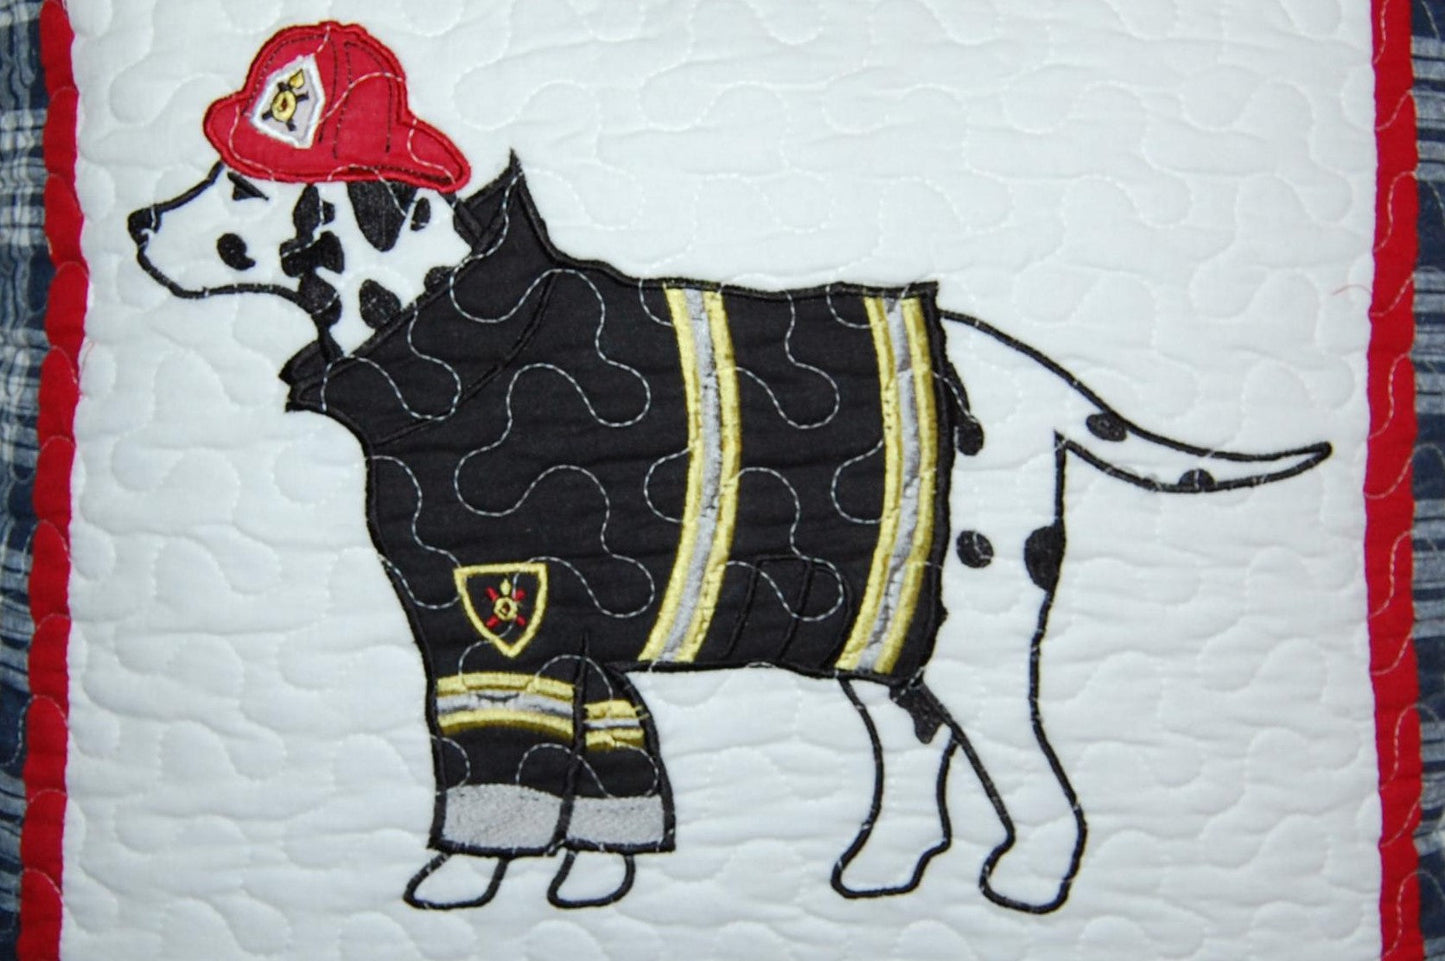 Ronnie Varsity Striped Fire Dog Dalmatian Square Decor Throw Pillow